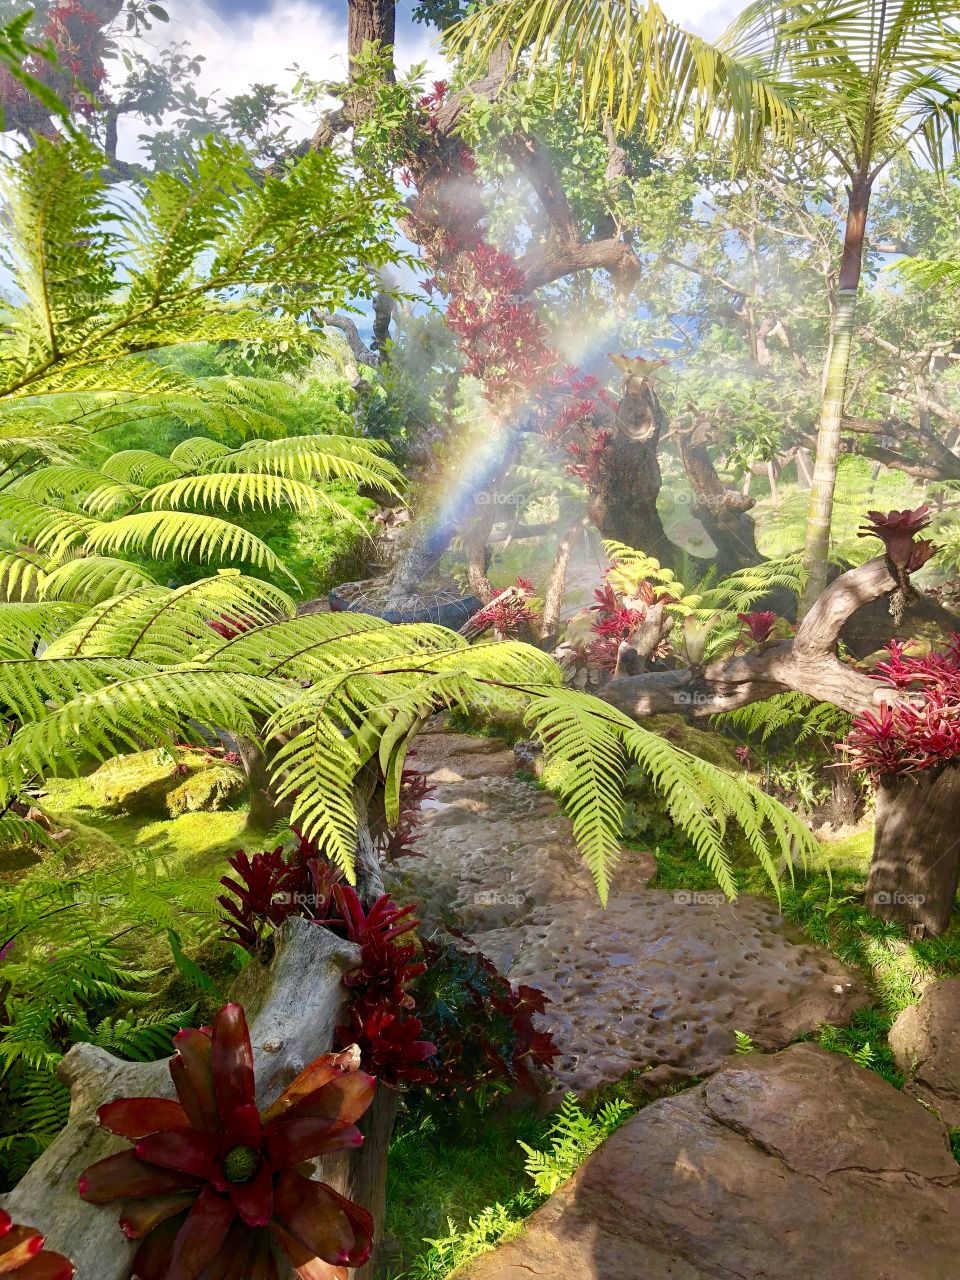 Natural Rainbow in the greenish garden